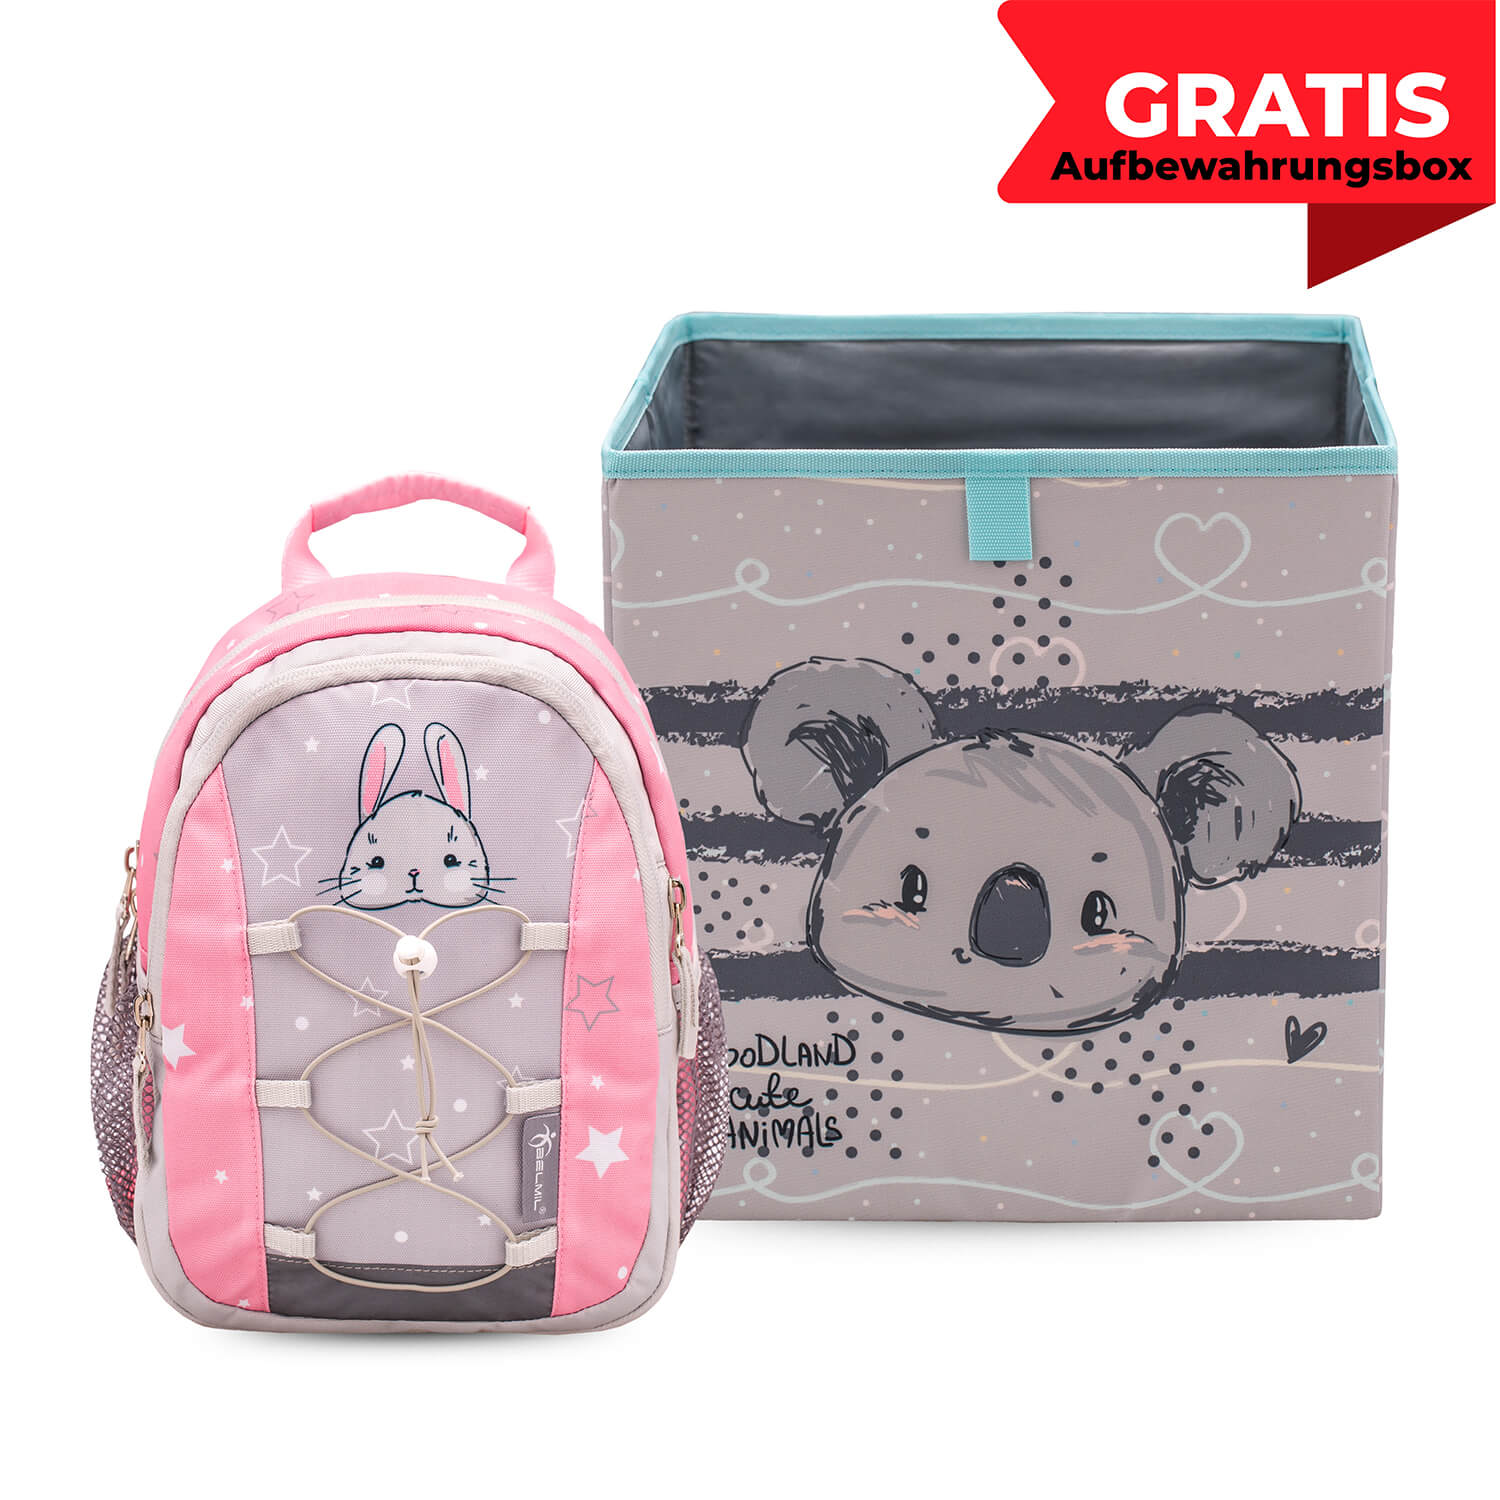 Mini Kiddy Woodland Rabbit Kindergarten Bag mit GRATIS Storage box